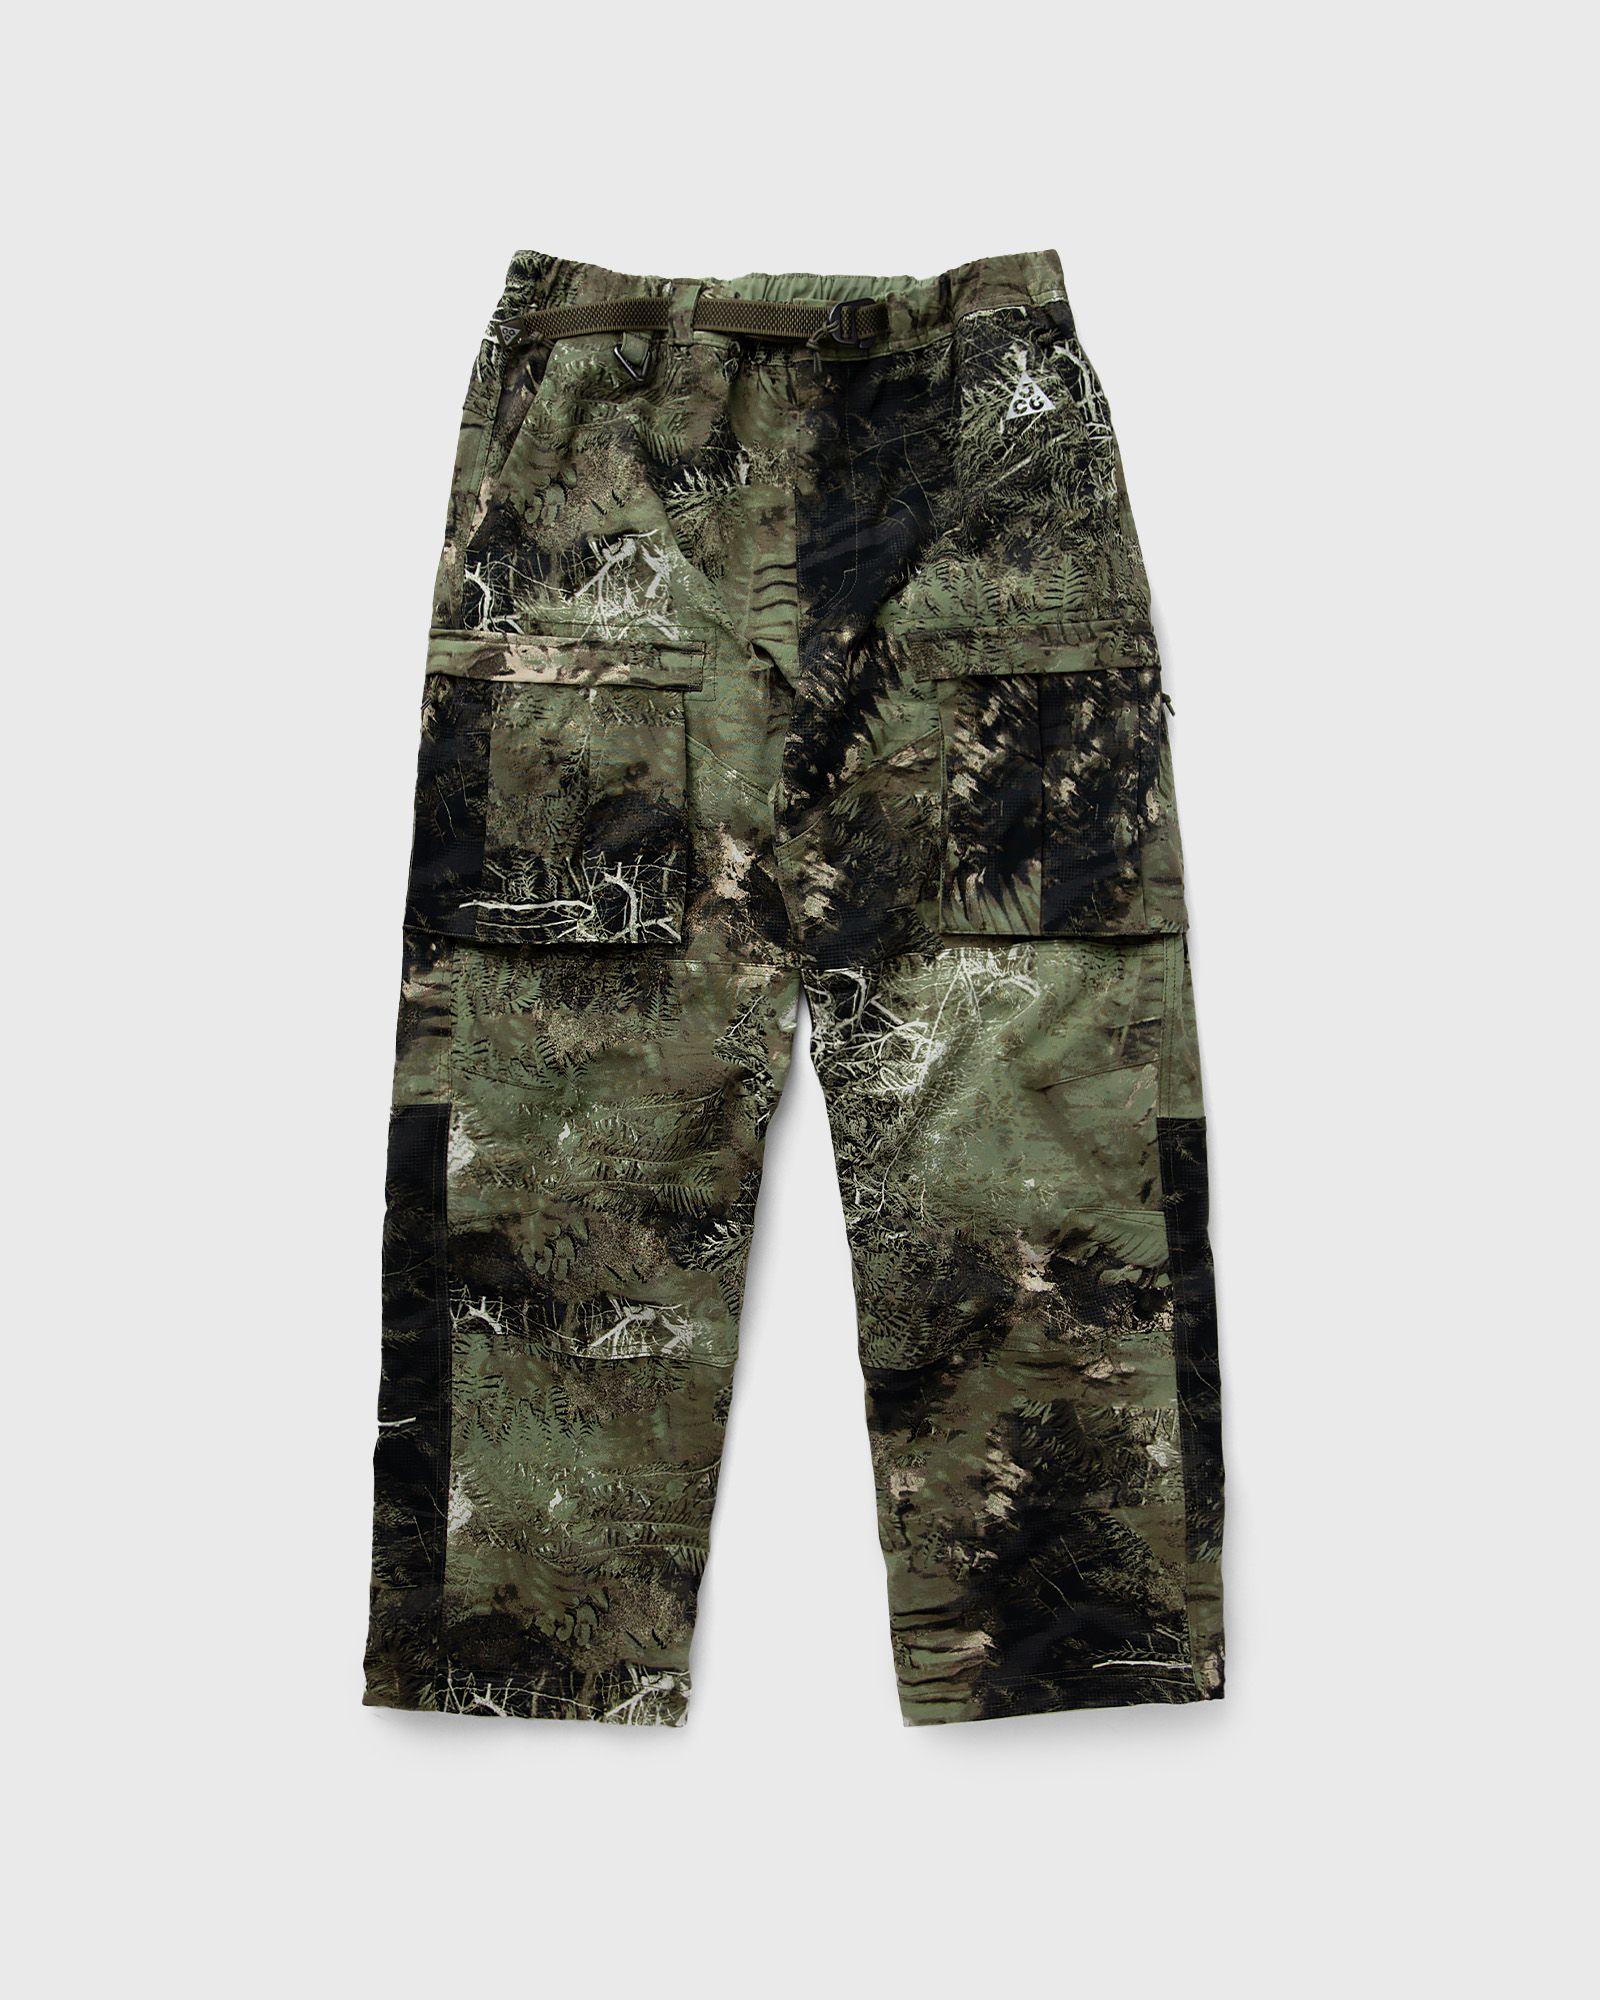 Nike - acg - smith summit - allover print cargo pant men cargo pants green in größe:m